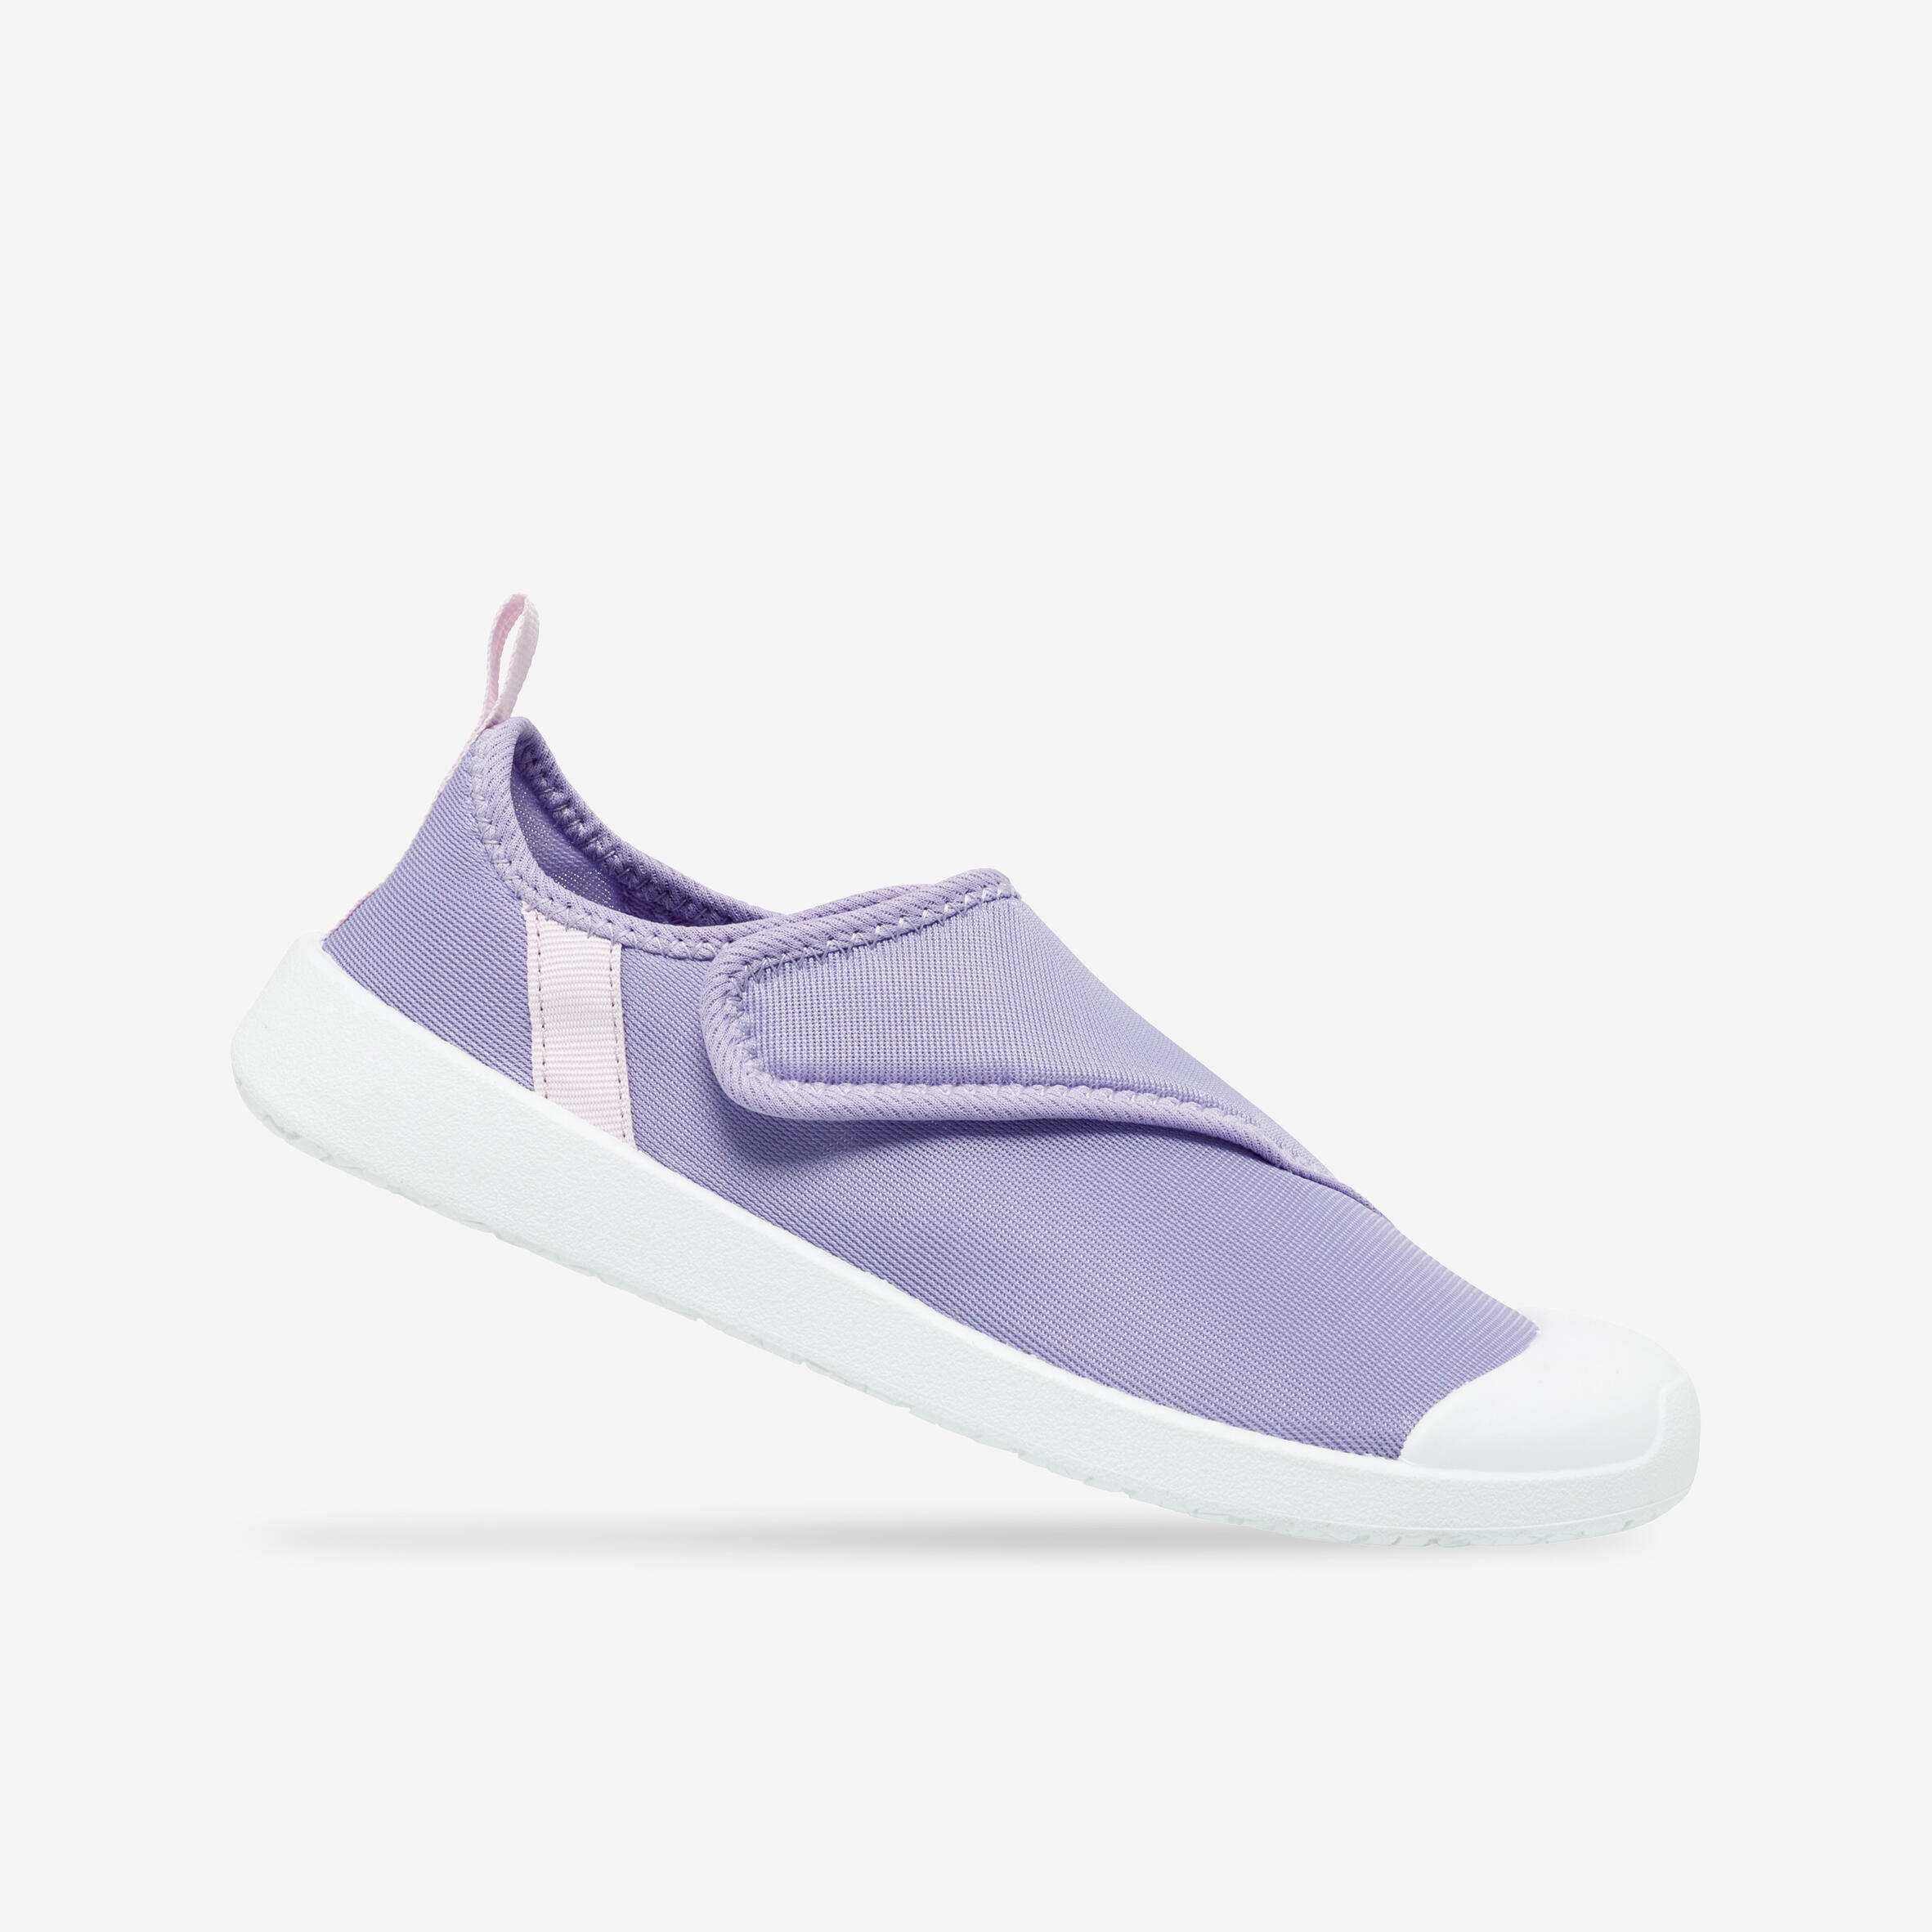 chaussures aquatiques avec scratch enfant - aquashoes 120 - violet - subea